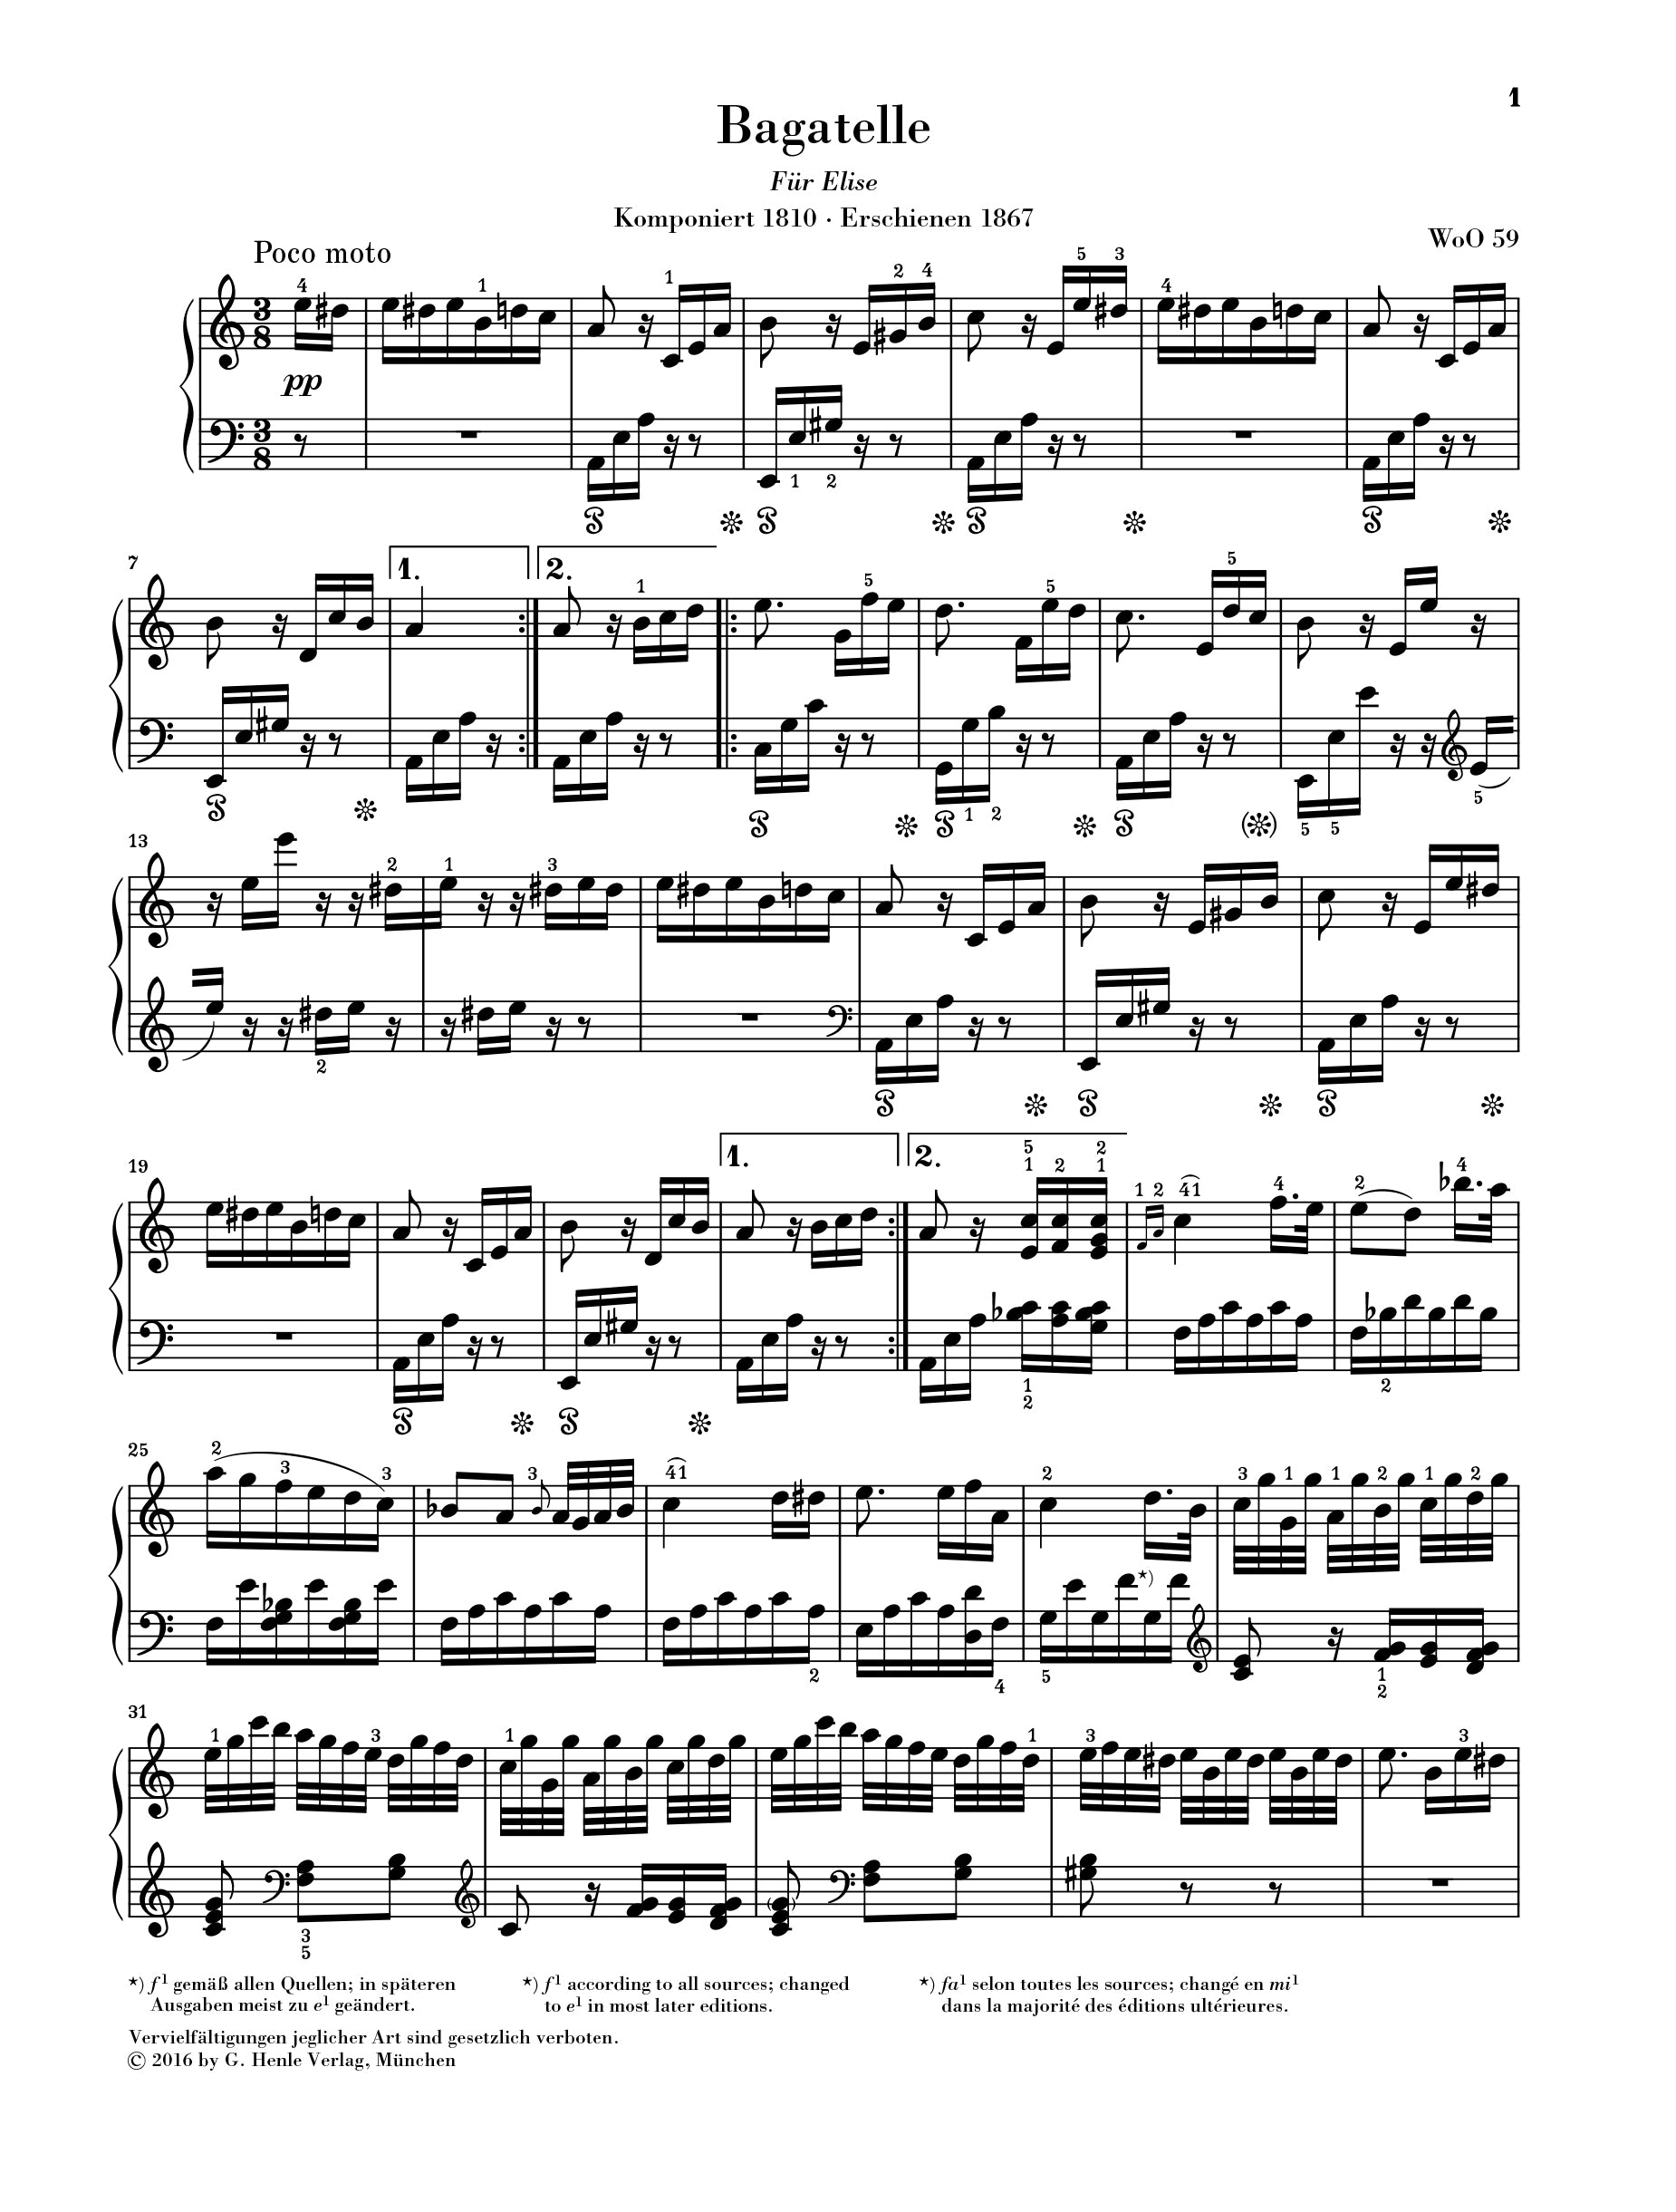 Beethoven: Bagatelle in a minor WoO 59 (Für Elise)